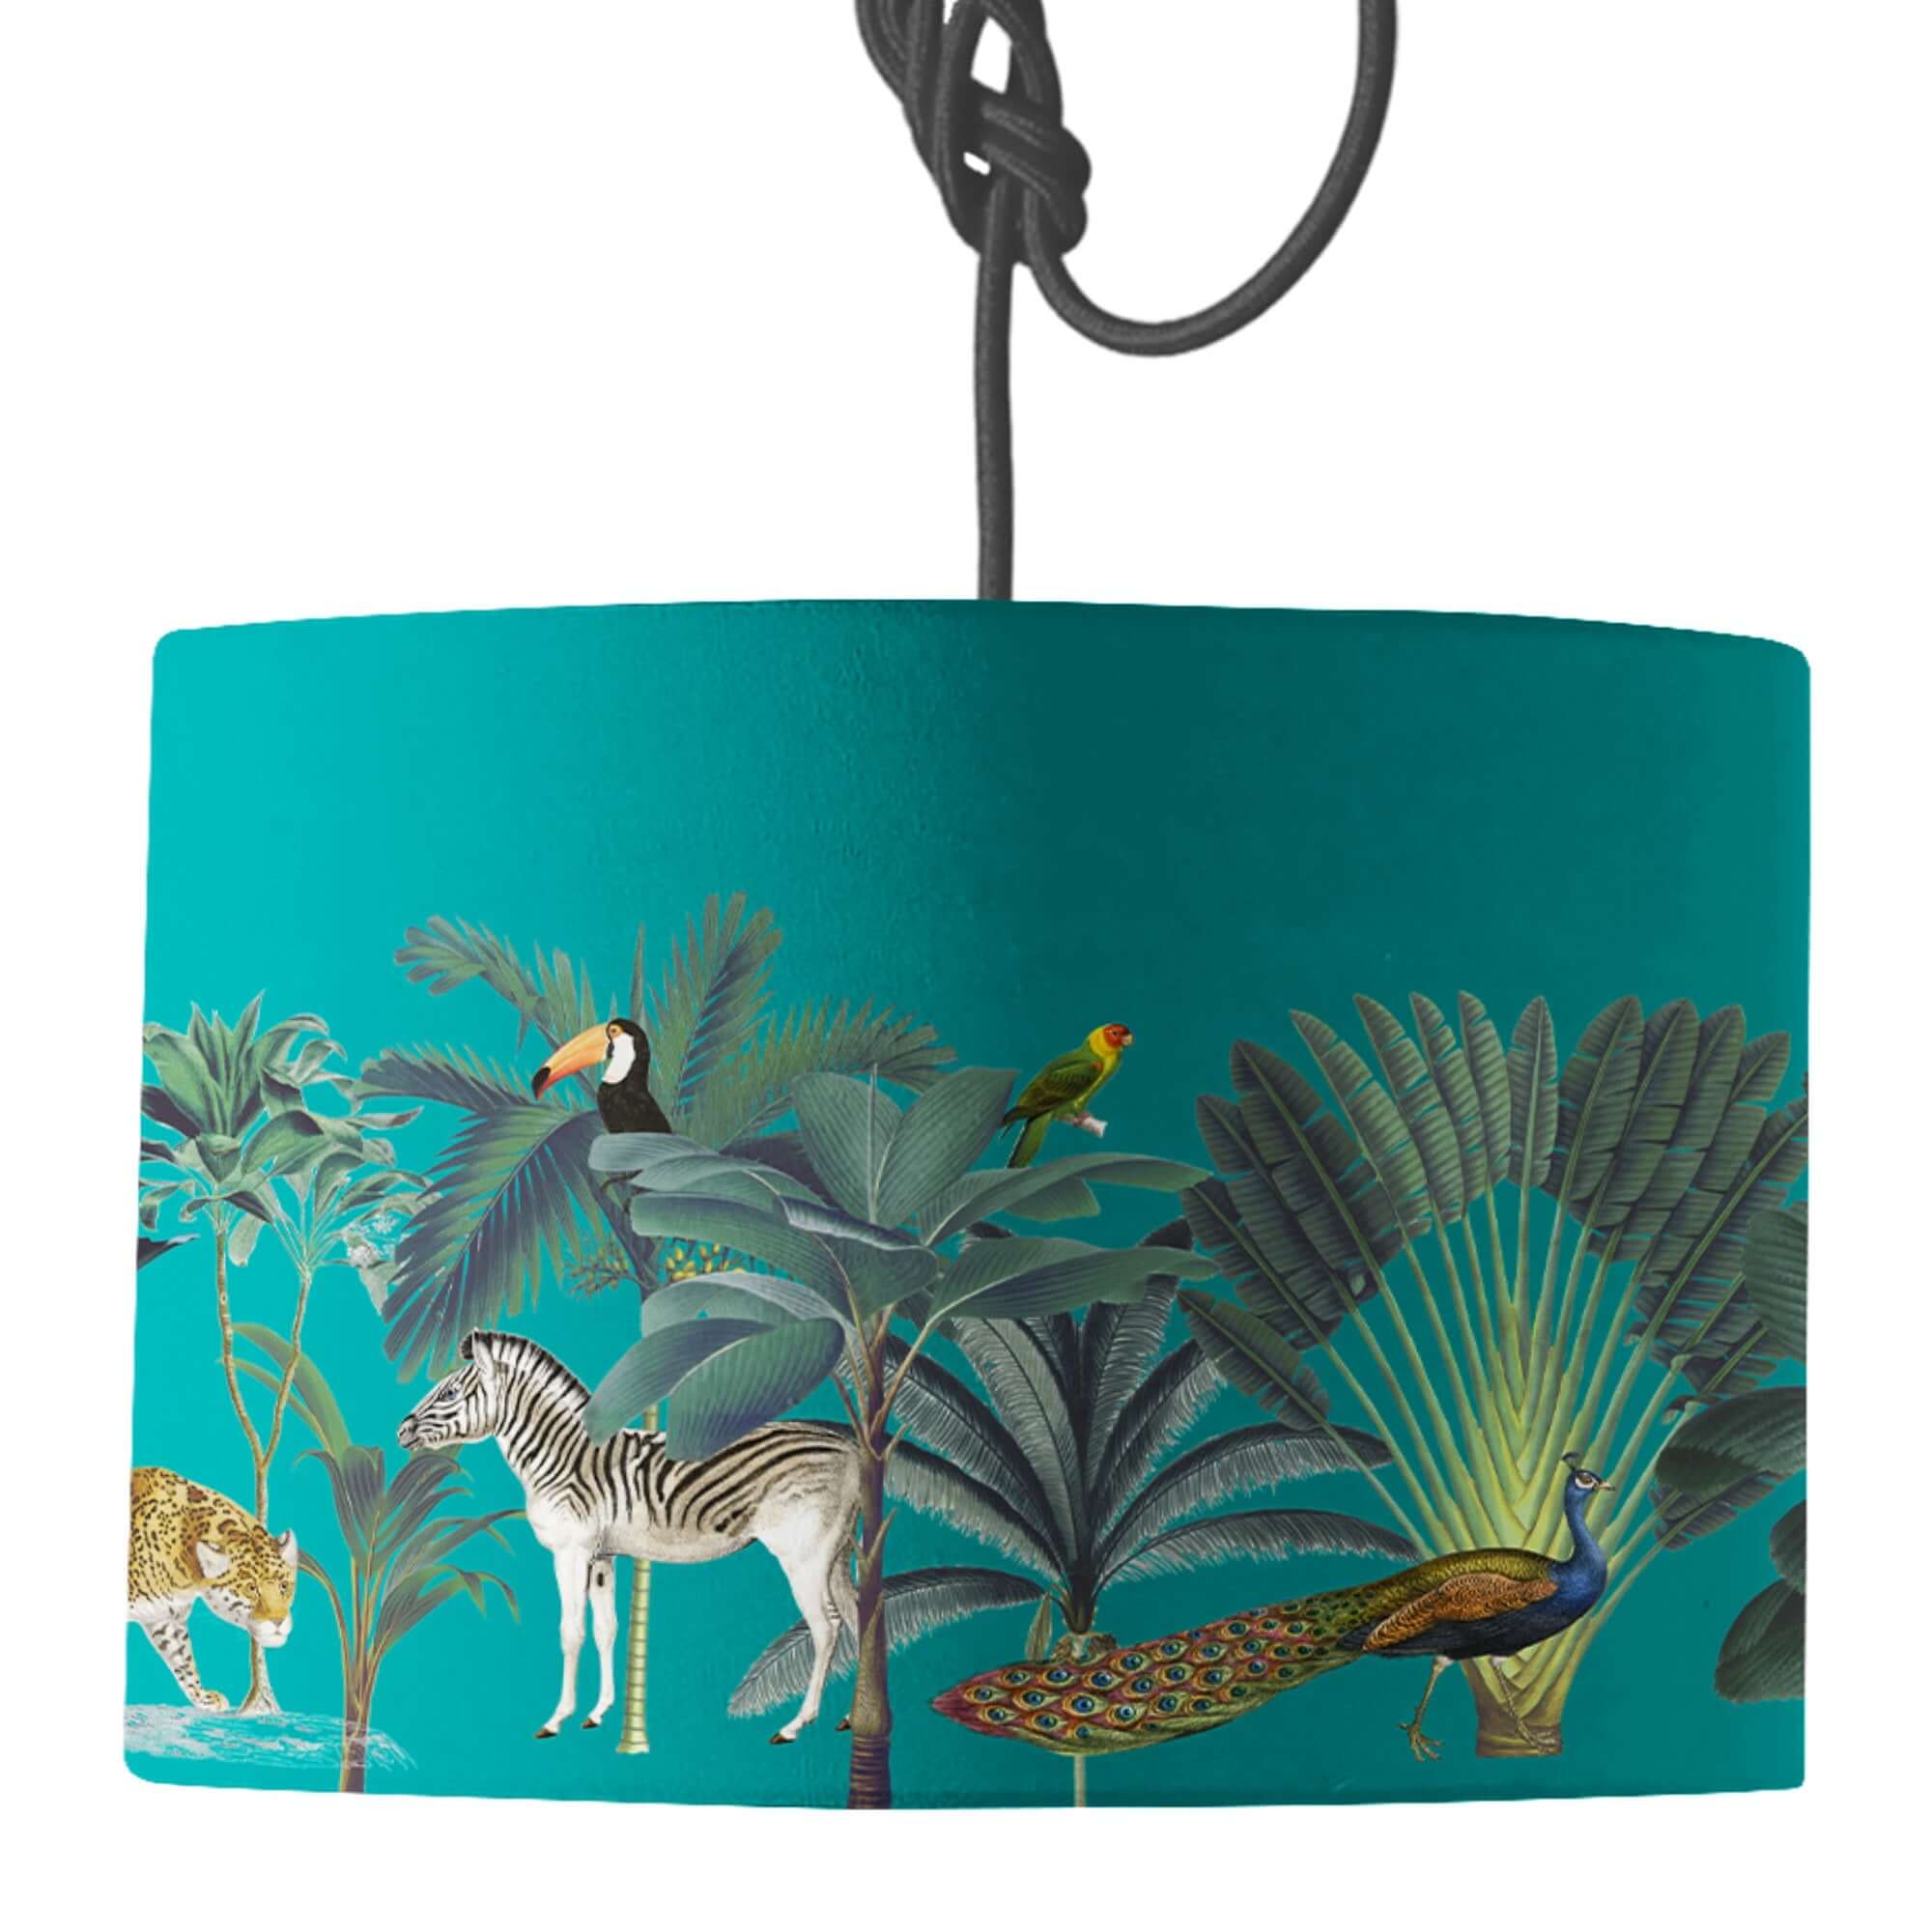 Darwin's Menagerie Terquoise Lamp Shade lampshade Mustard and Gray Ltd Shropshire UK